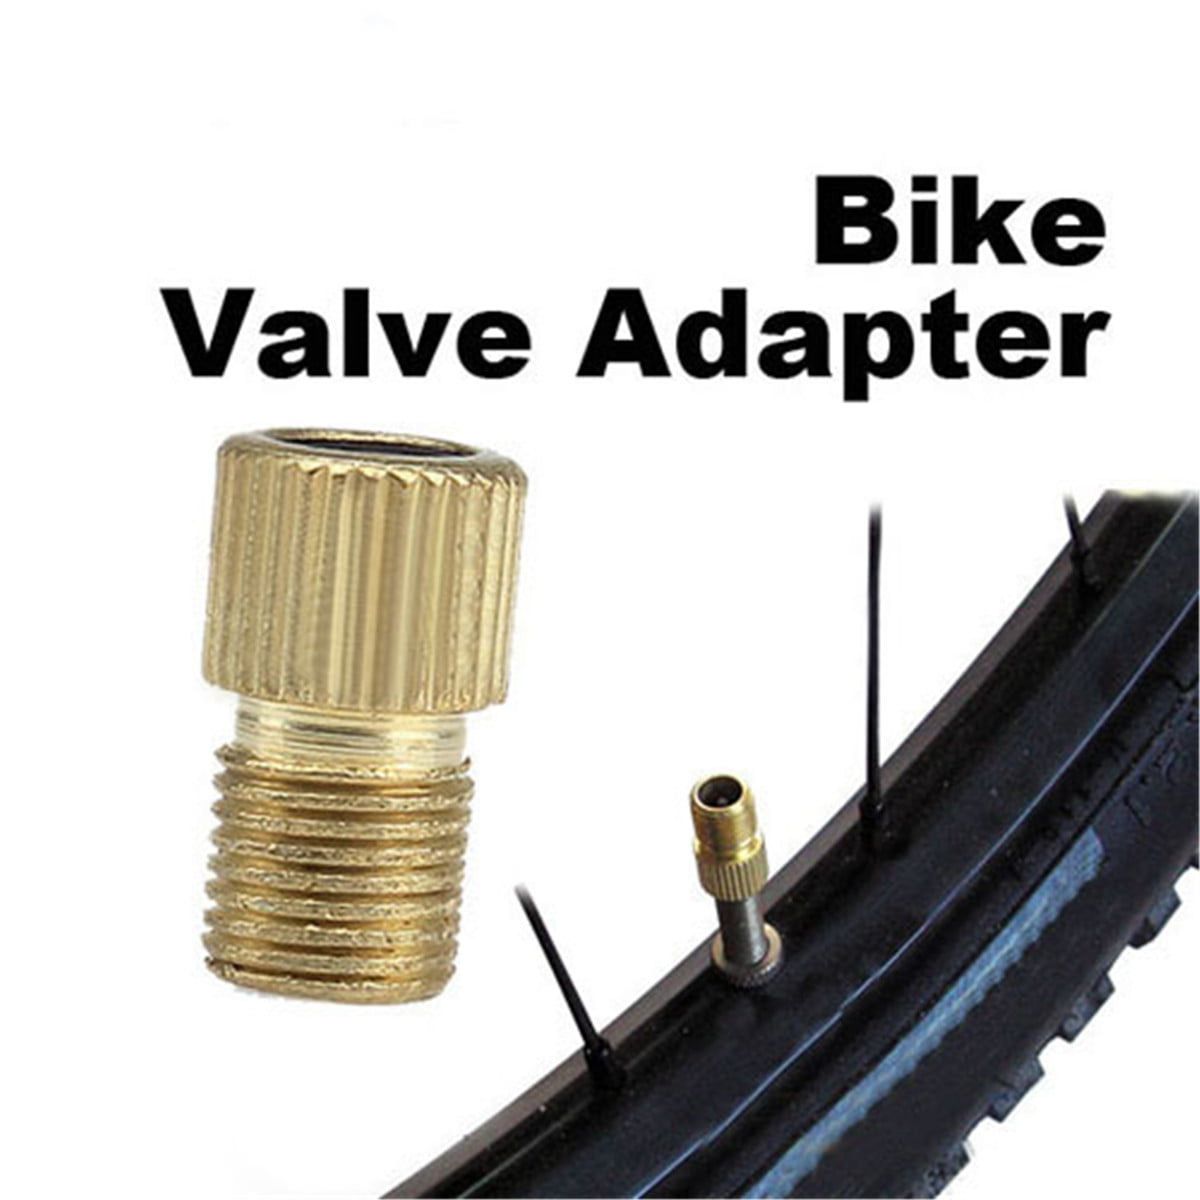 presta bike valve